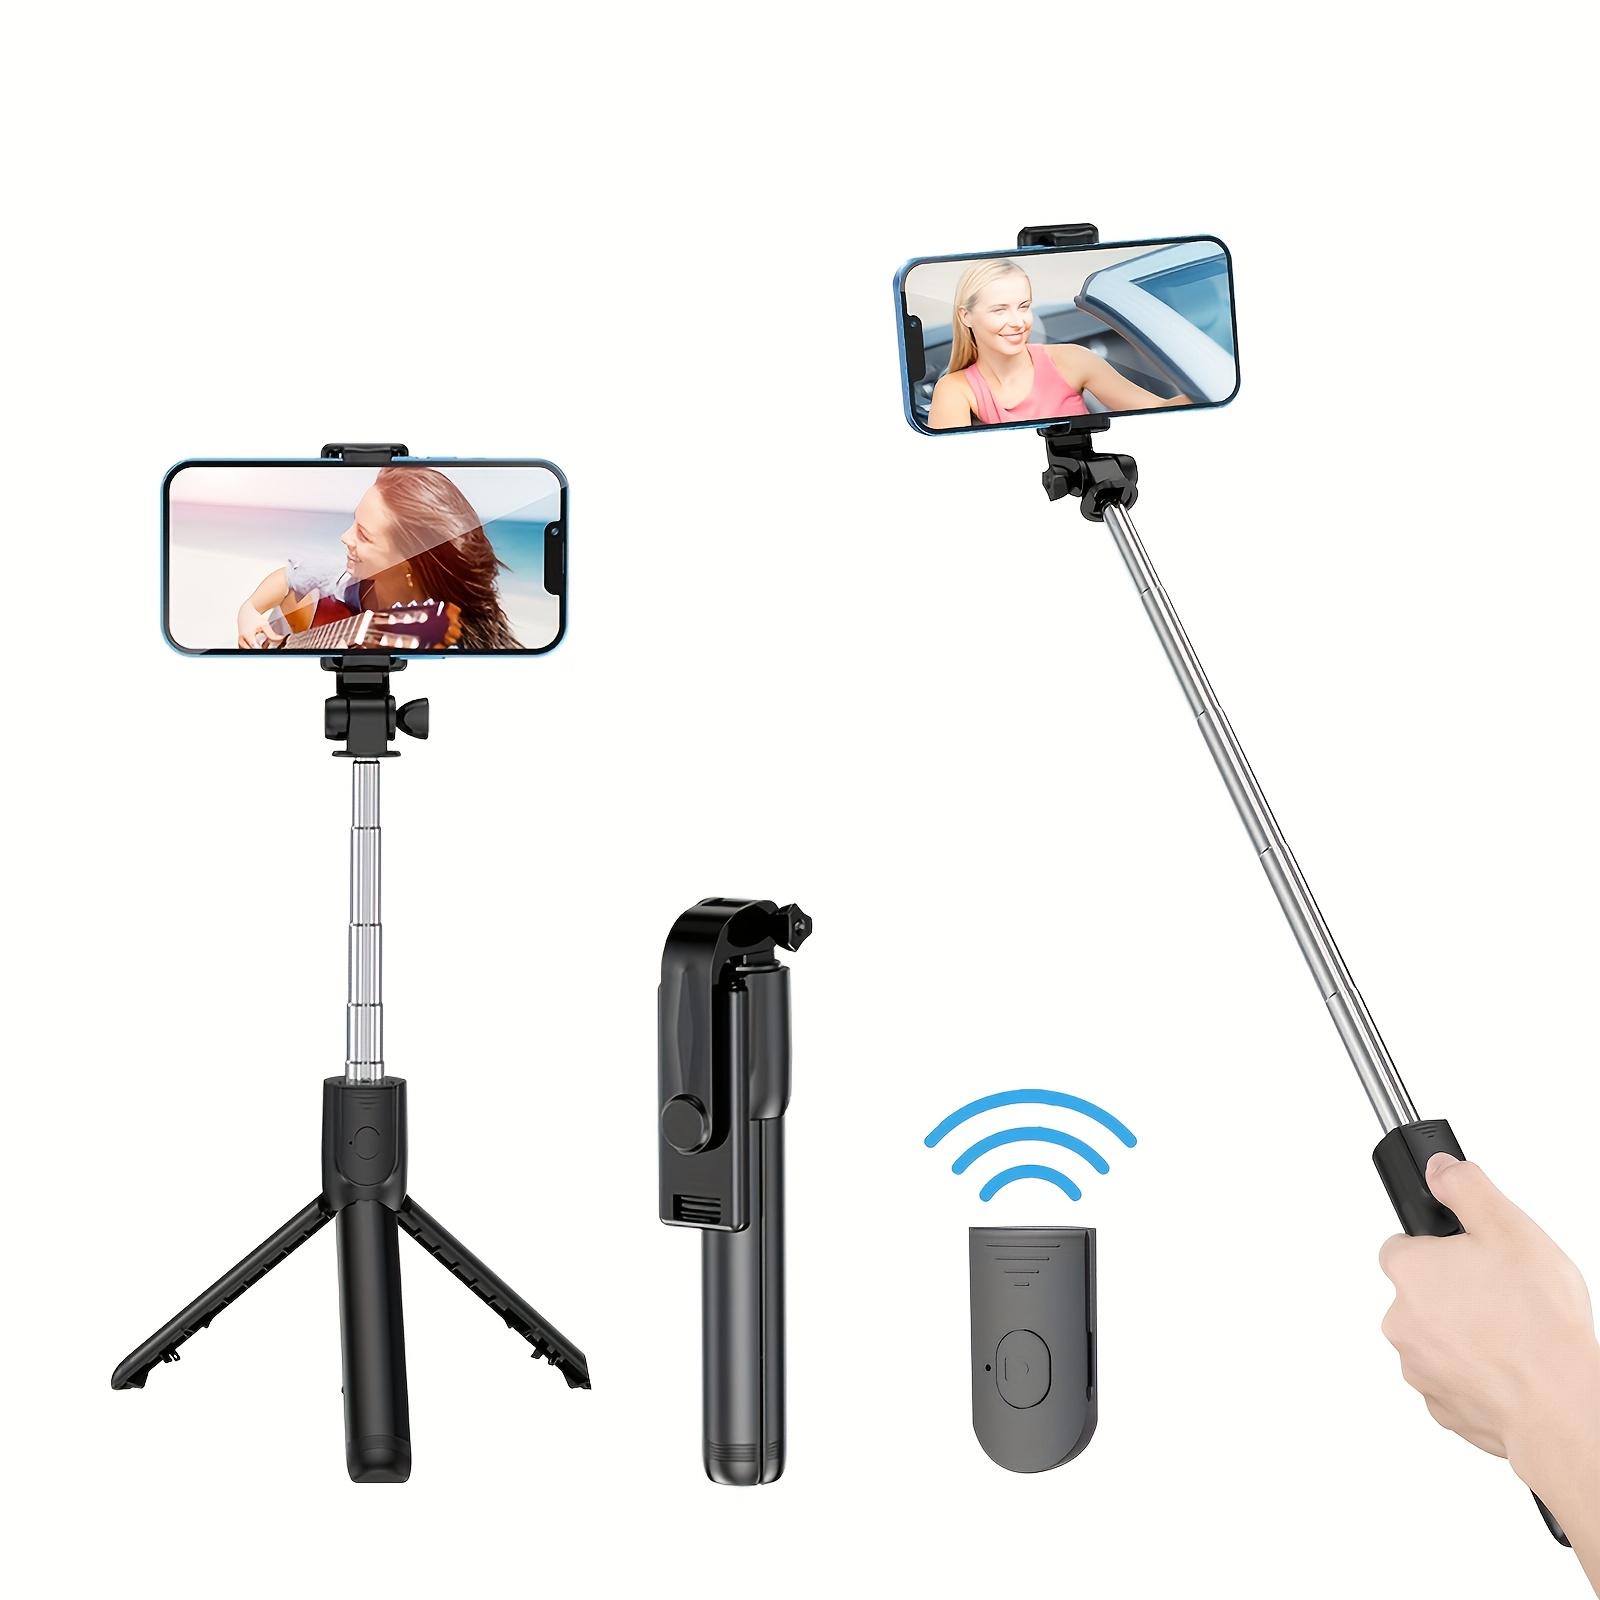 

Selfie Stick Fully Automatic Multi-functional Tripod Mobile Phone Bracket Desktop Photo Shoot The Latest Travel